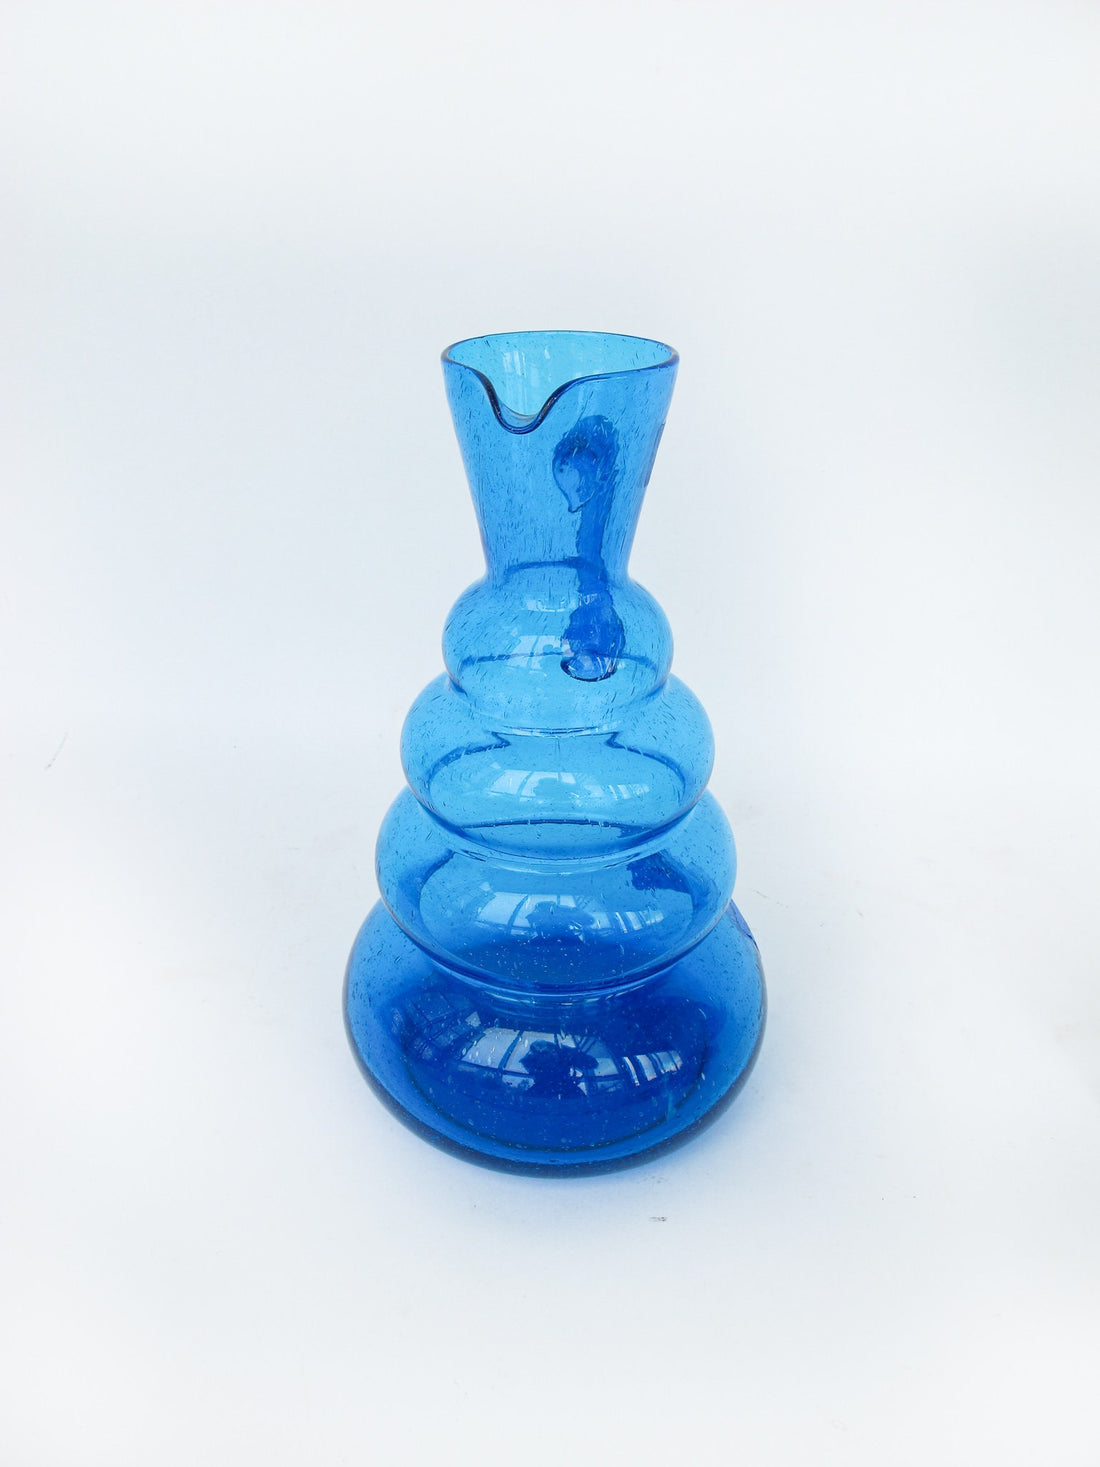 Wavy Blue Glass Serving Water Pitcher Vase